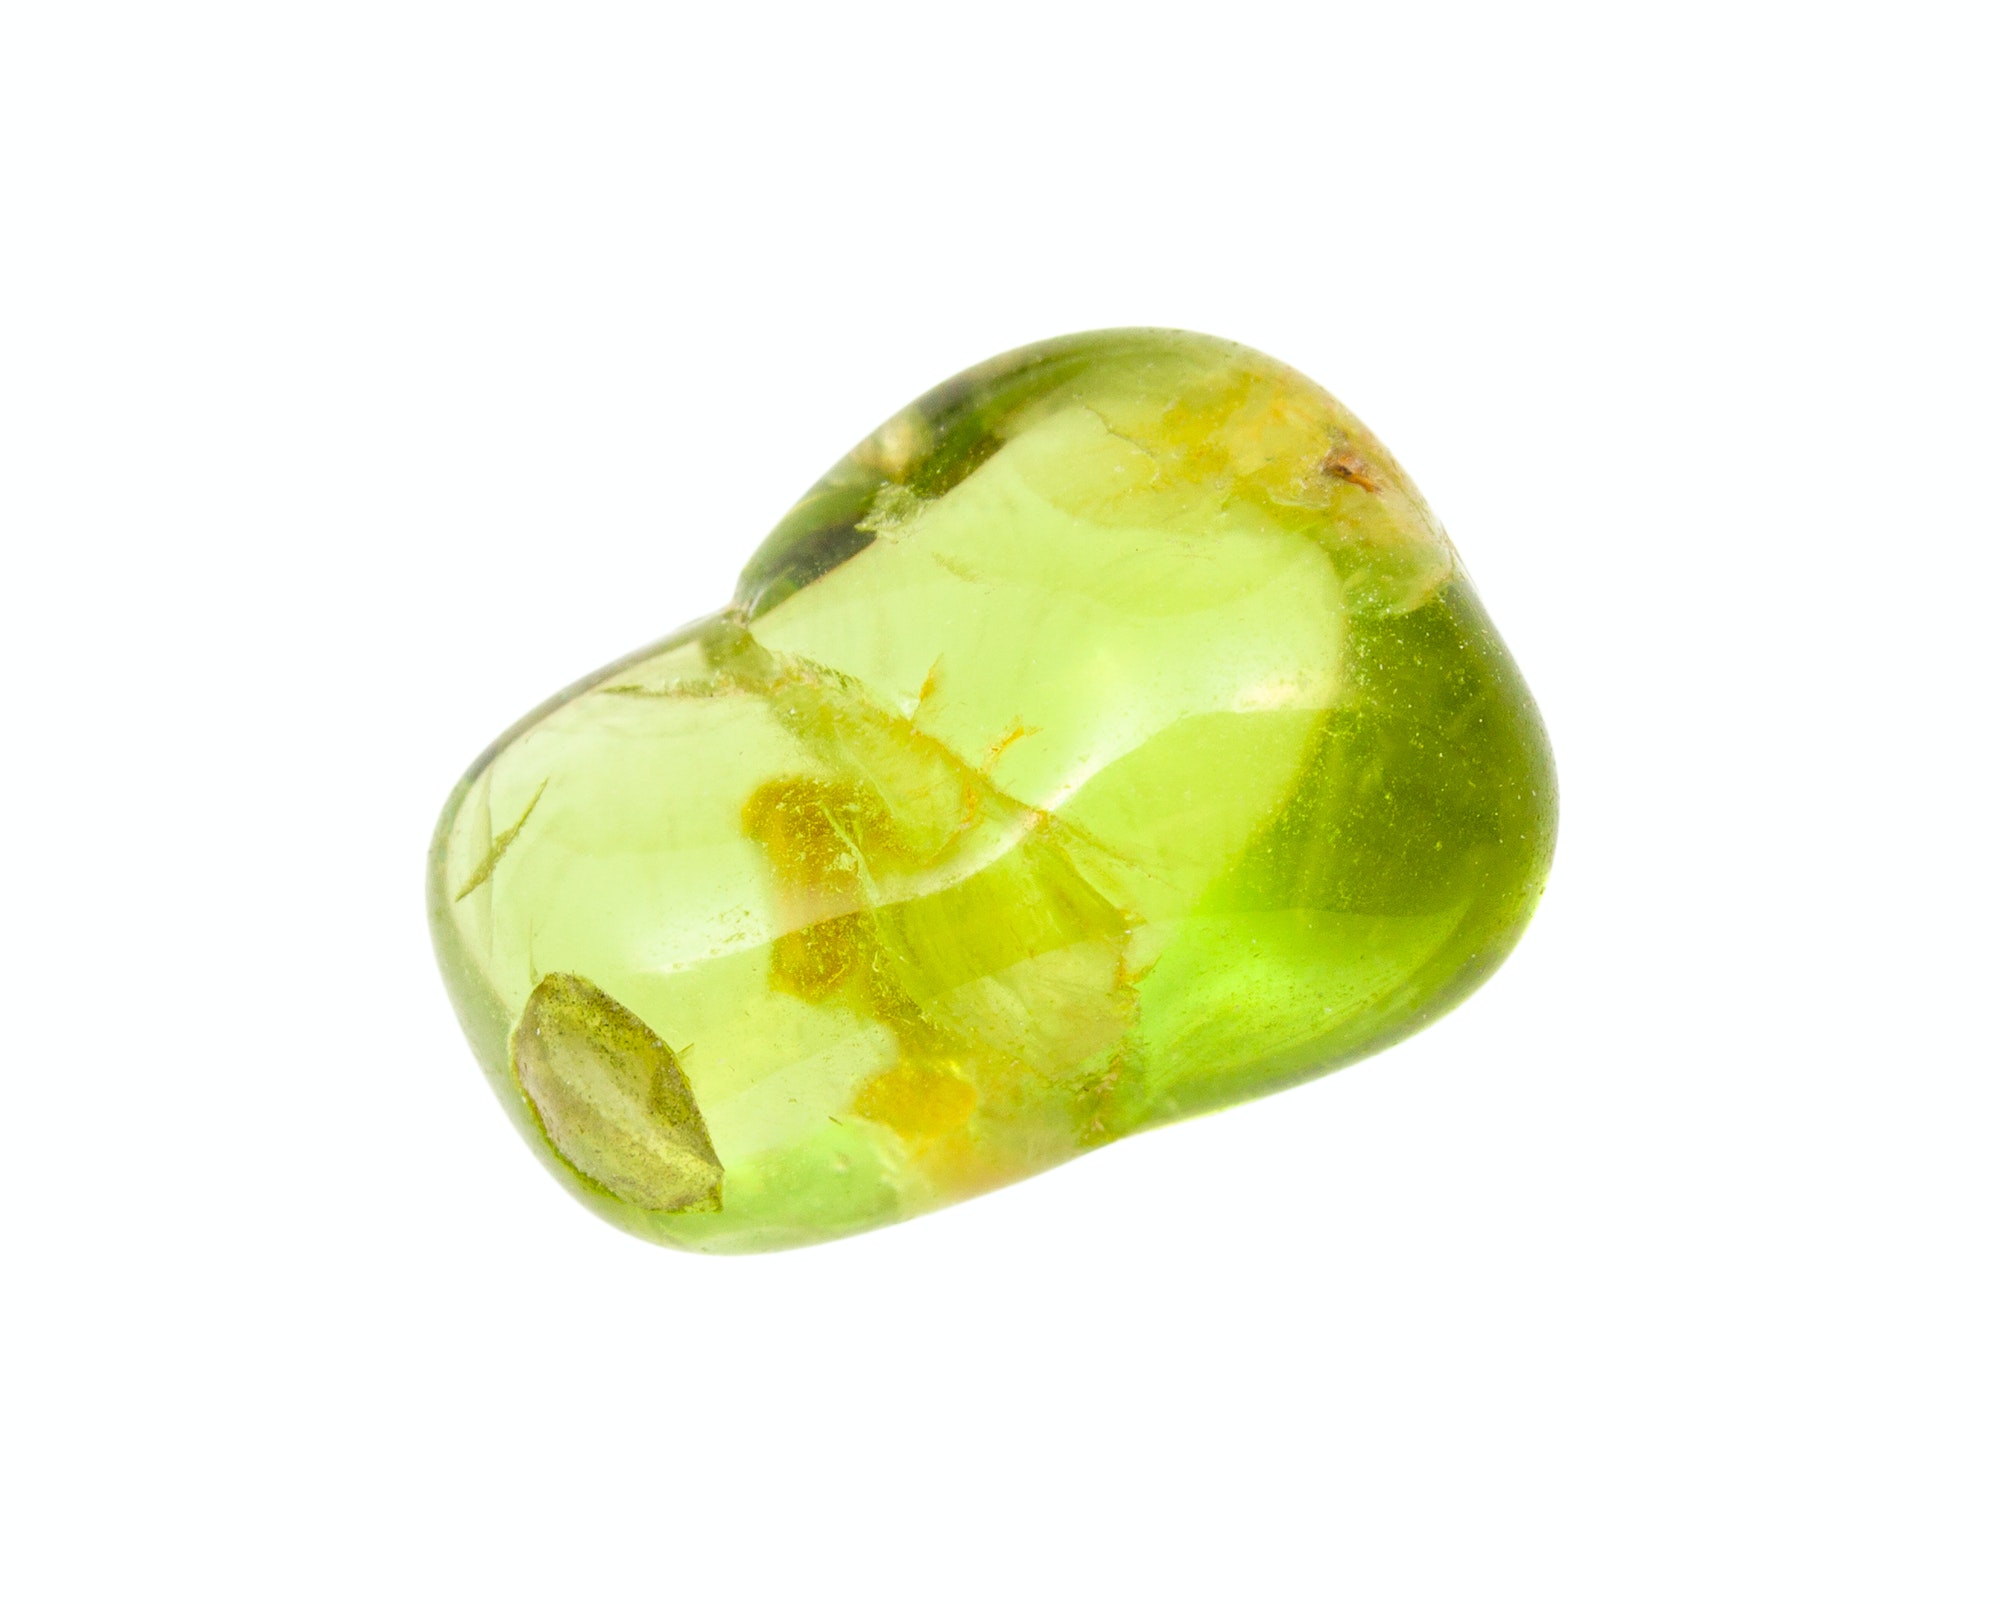 Peridot (Olivine, chrysolite) gem stone isolated